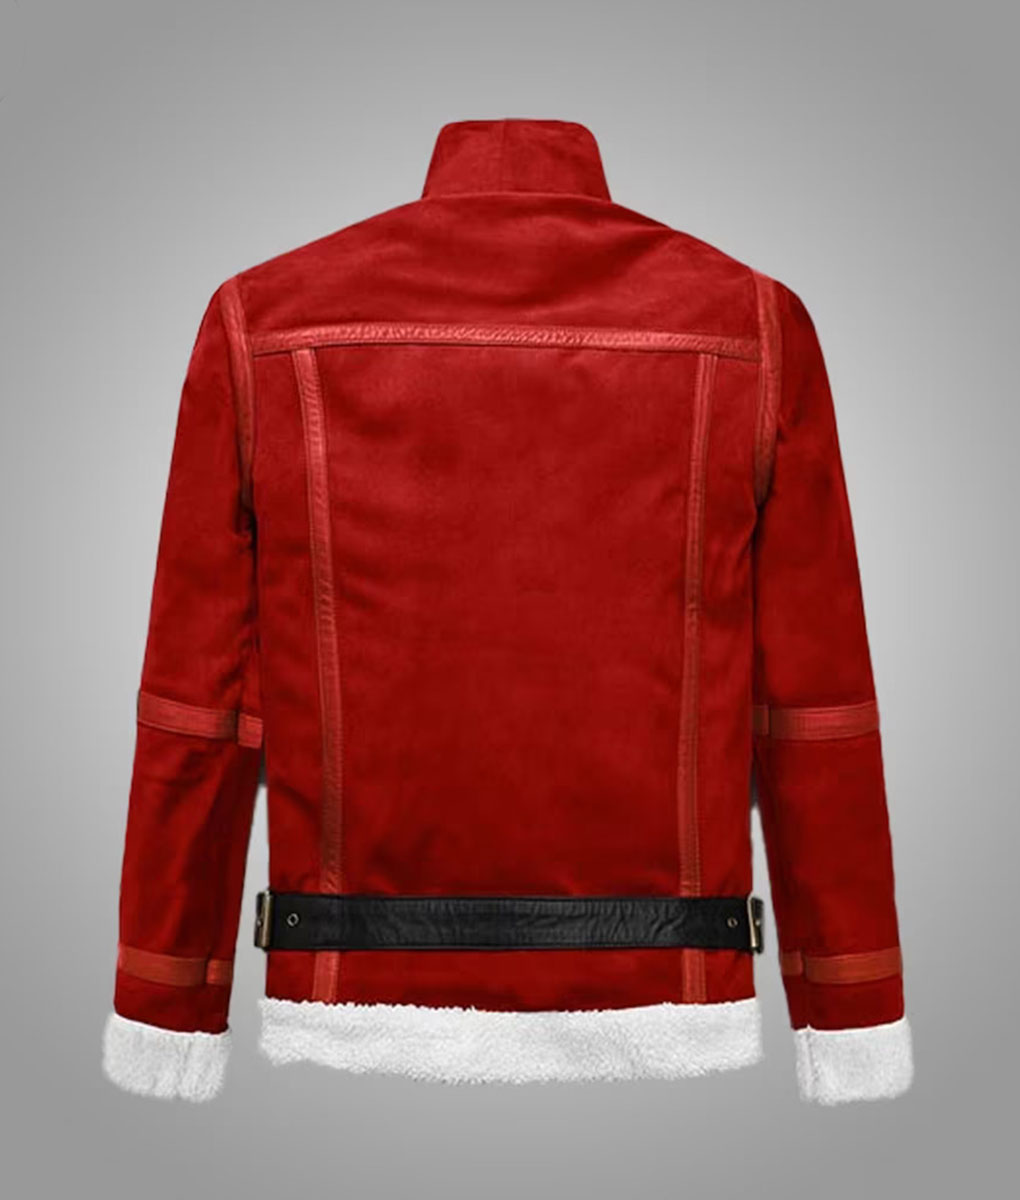 Spirited Ryan Reynolds Red Shearling Jacket (3)